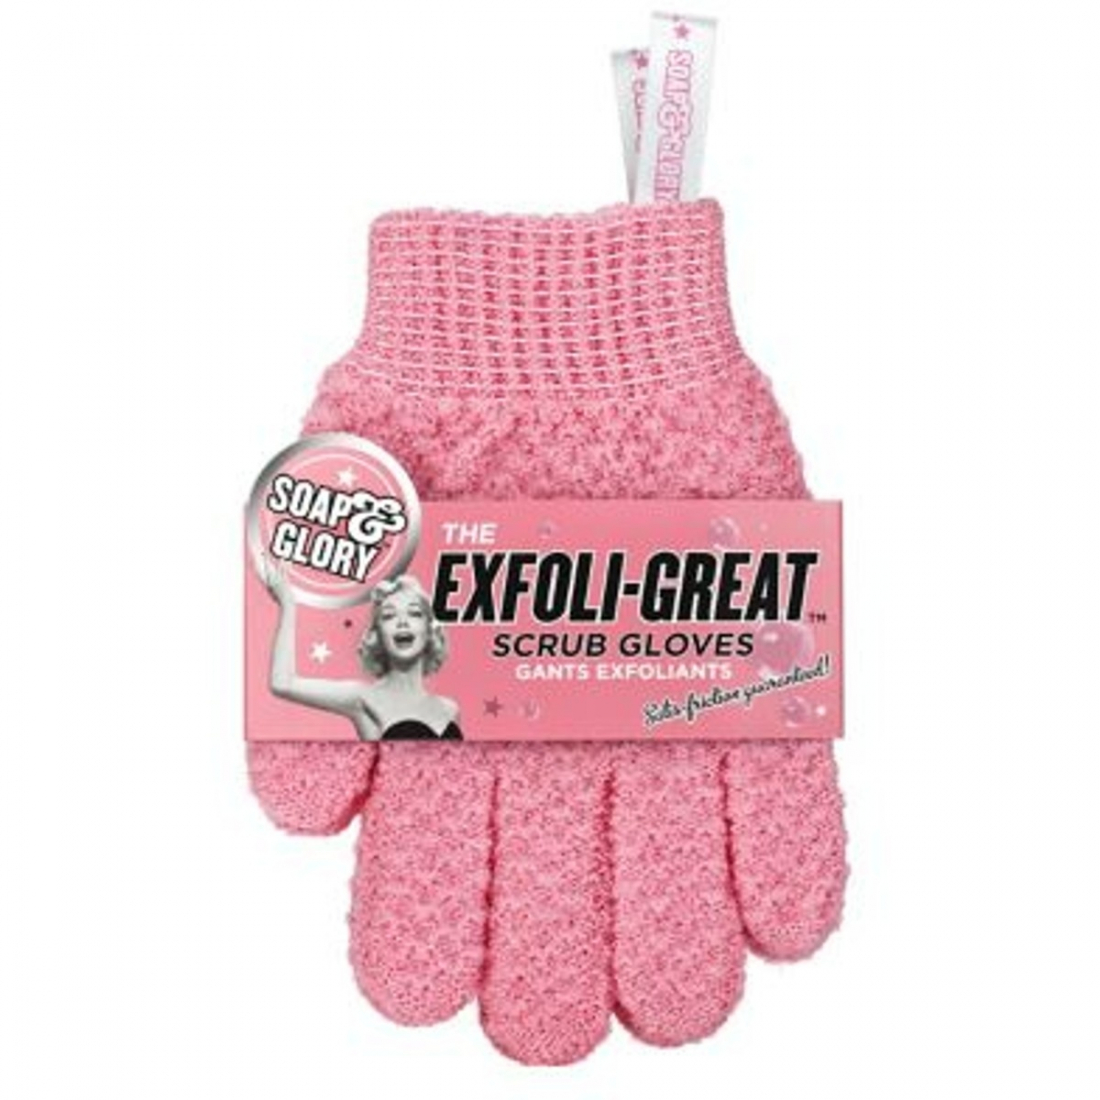 'The Exfoli-Great Scrub' Exfoliating Glove